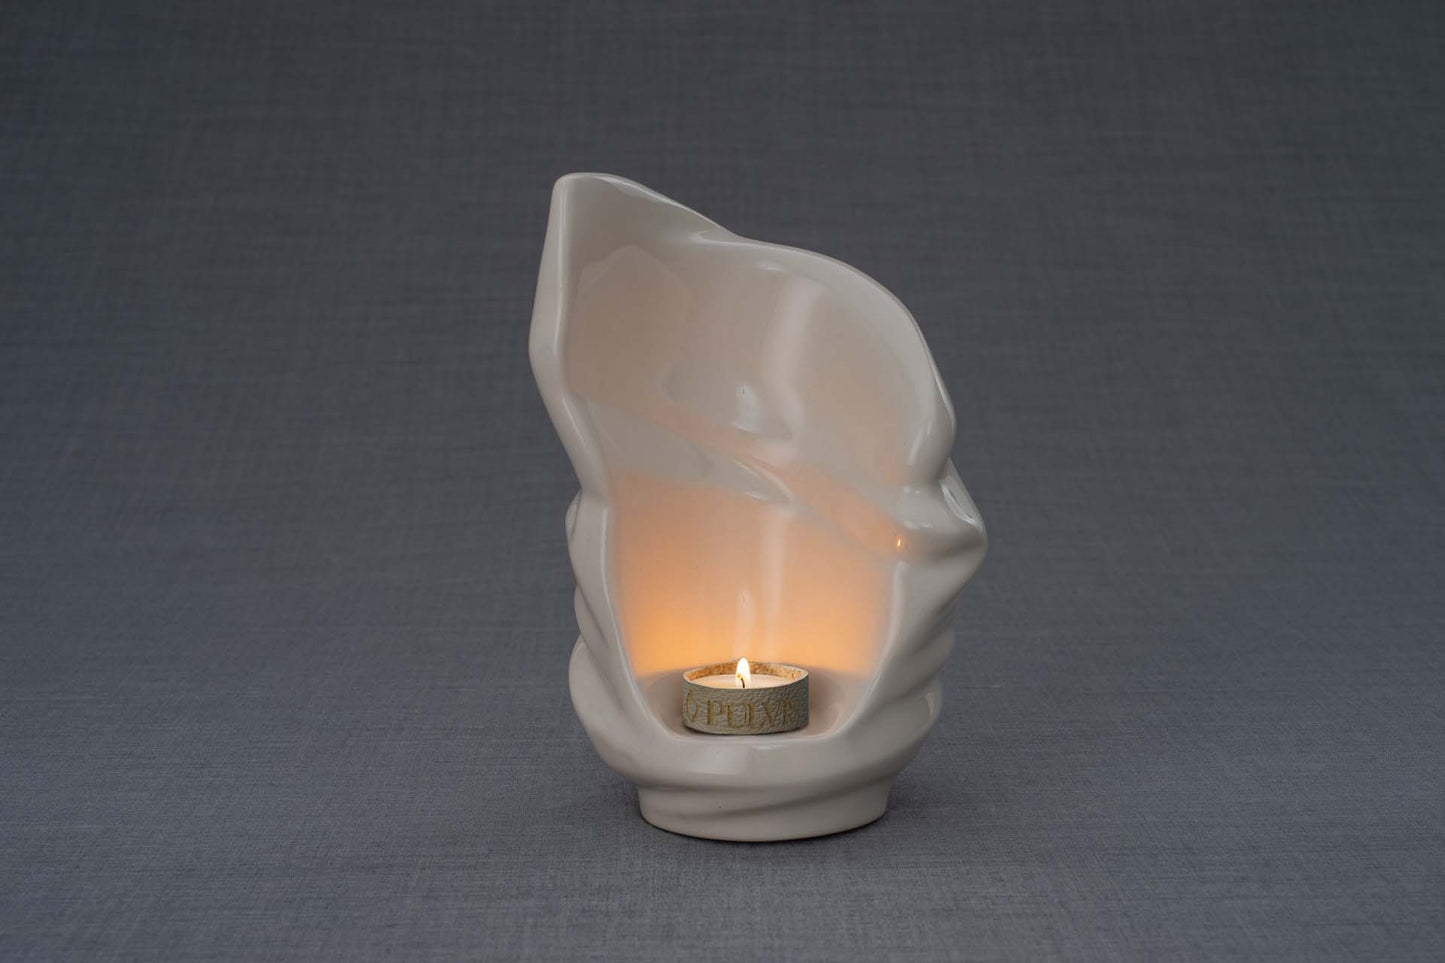 Pulvis Art Urns Keepsake Urn Handmade Cremation Keepsake Urn "Light" - Small | Transparent | Ceramic